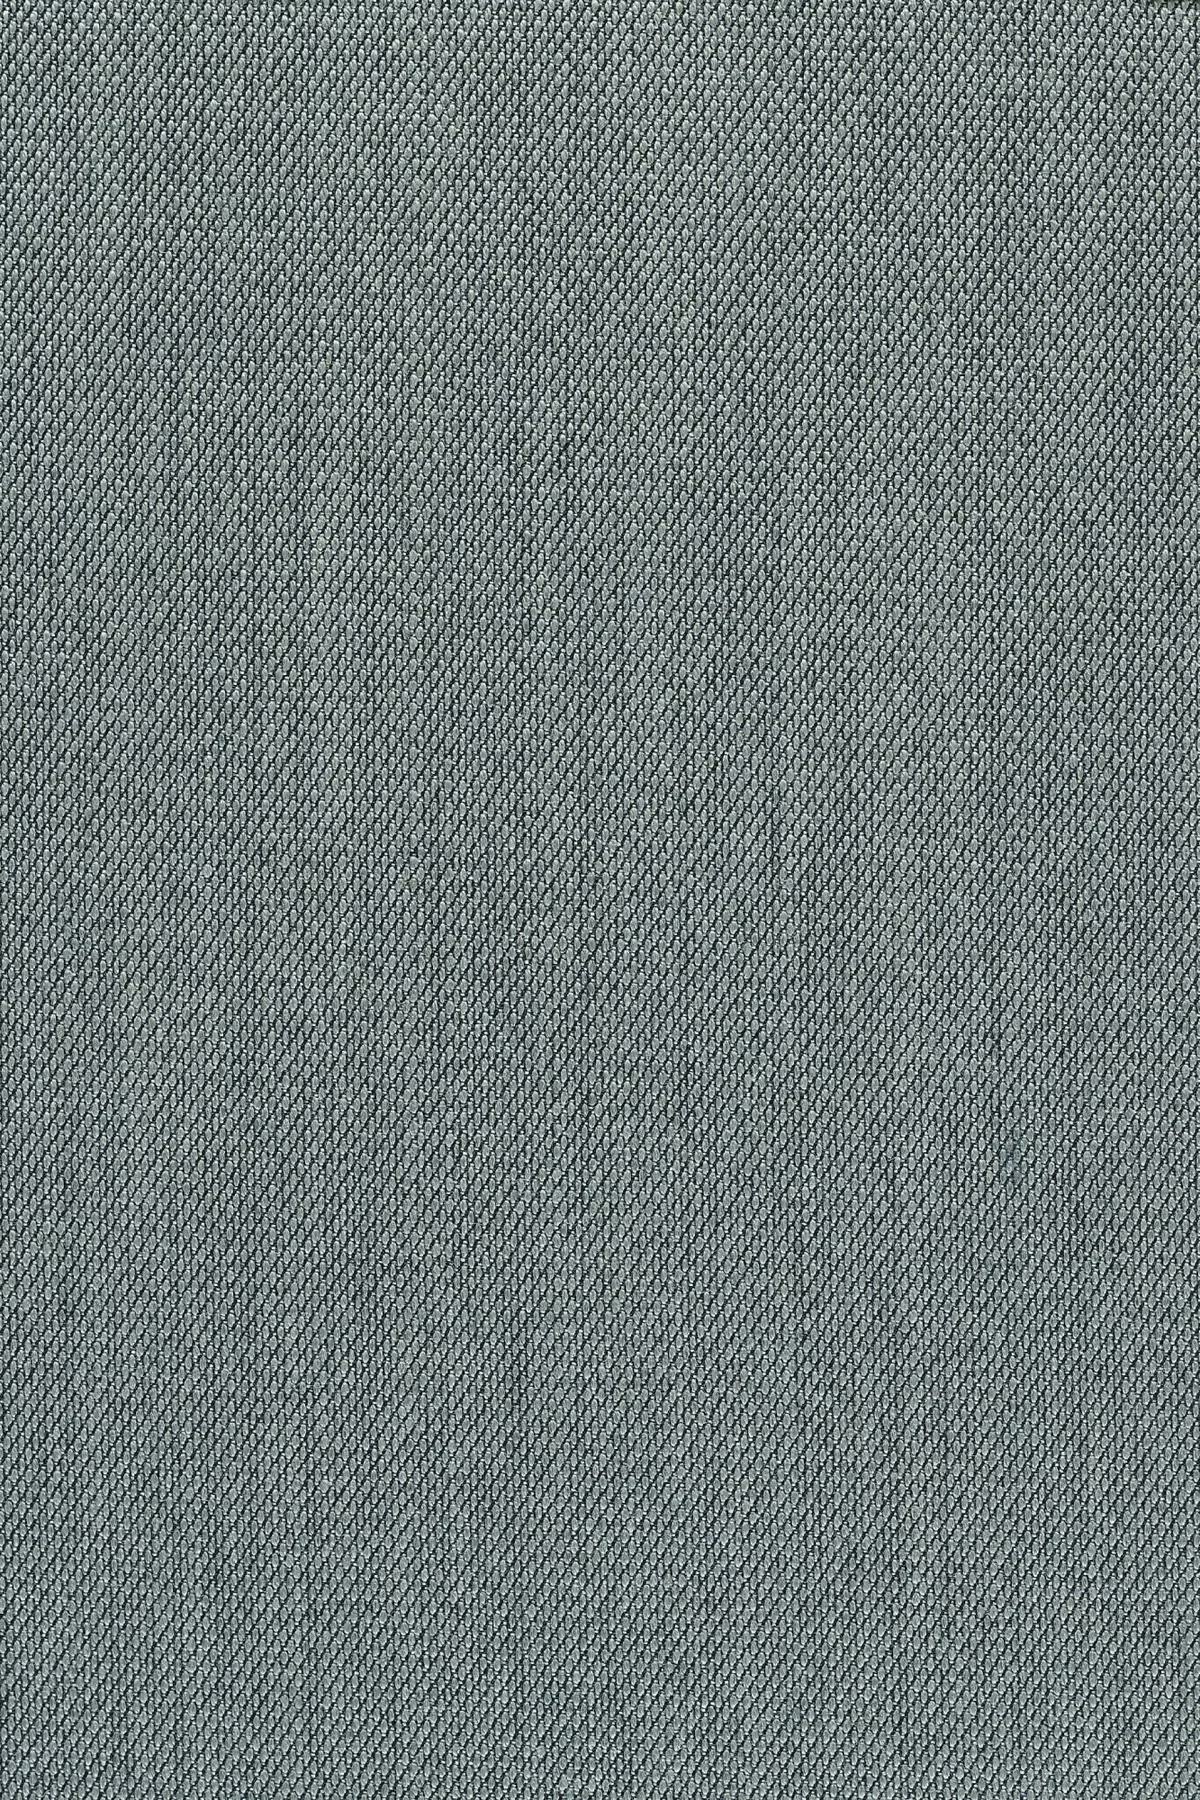 Fabric sample Steelcut Trio 3 153 grey